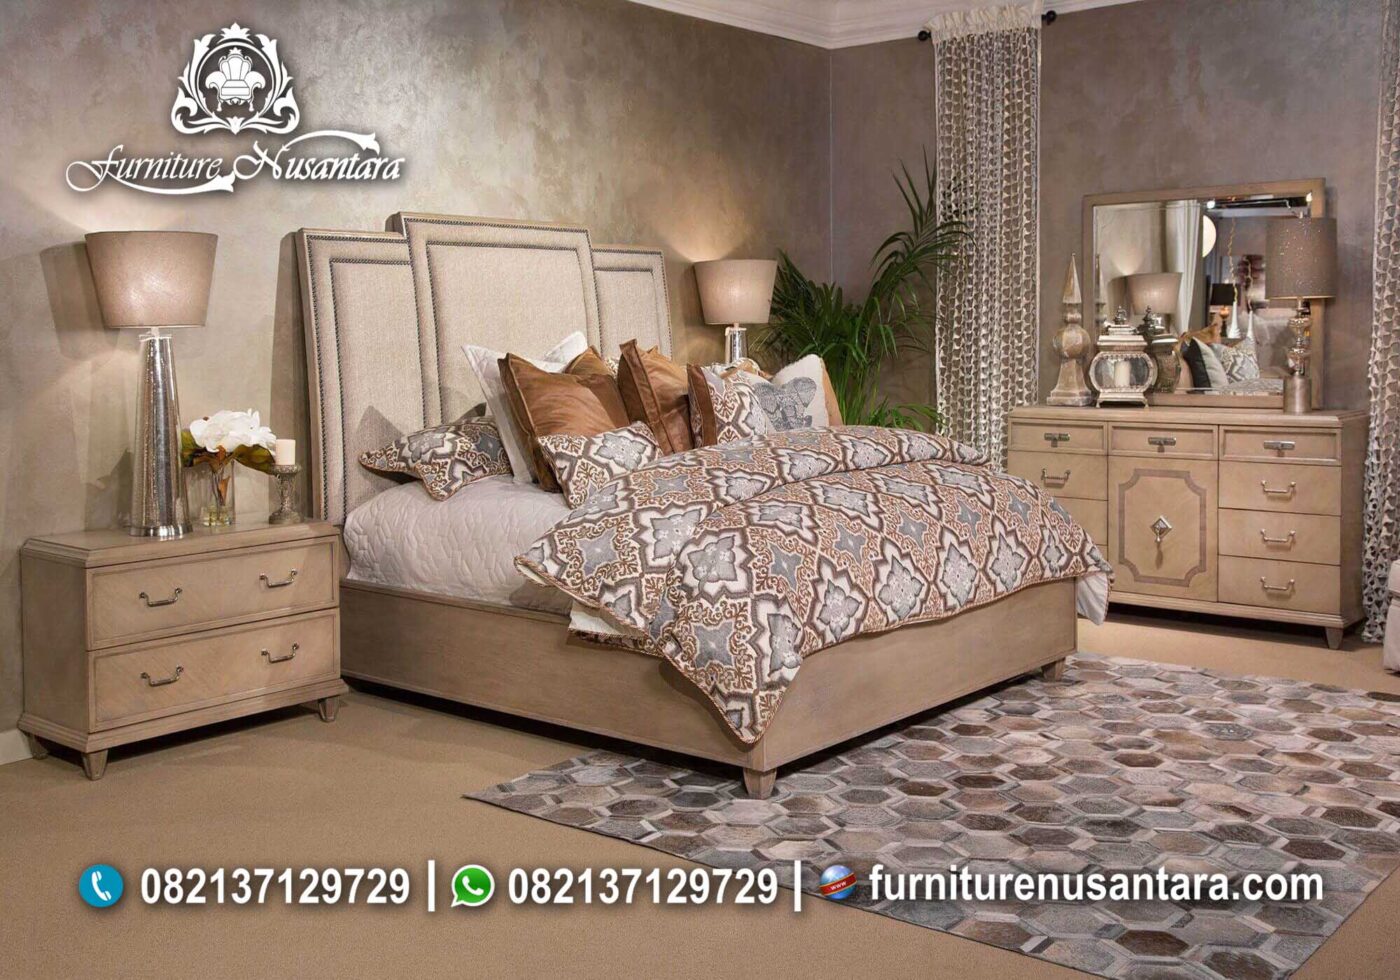 Desain Kamar Minimalis KS-22, Furniture Nusantara